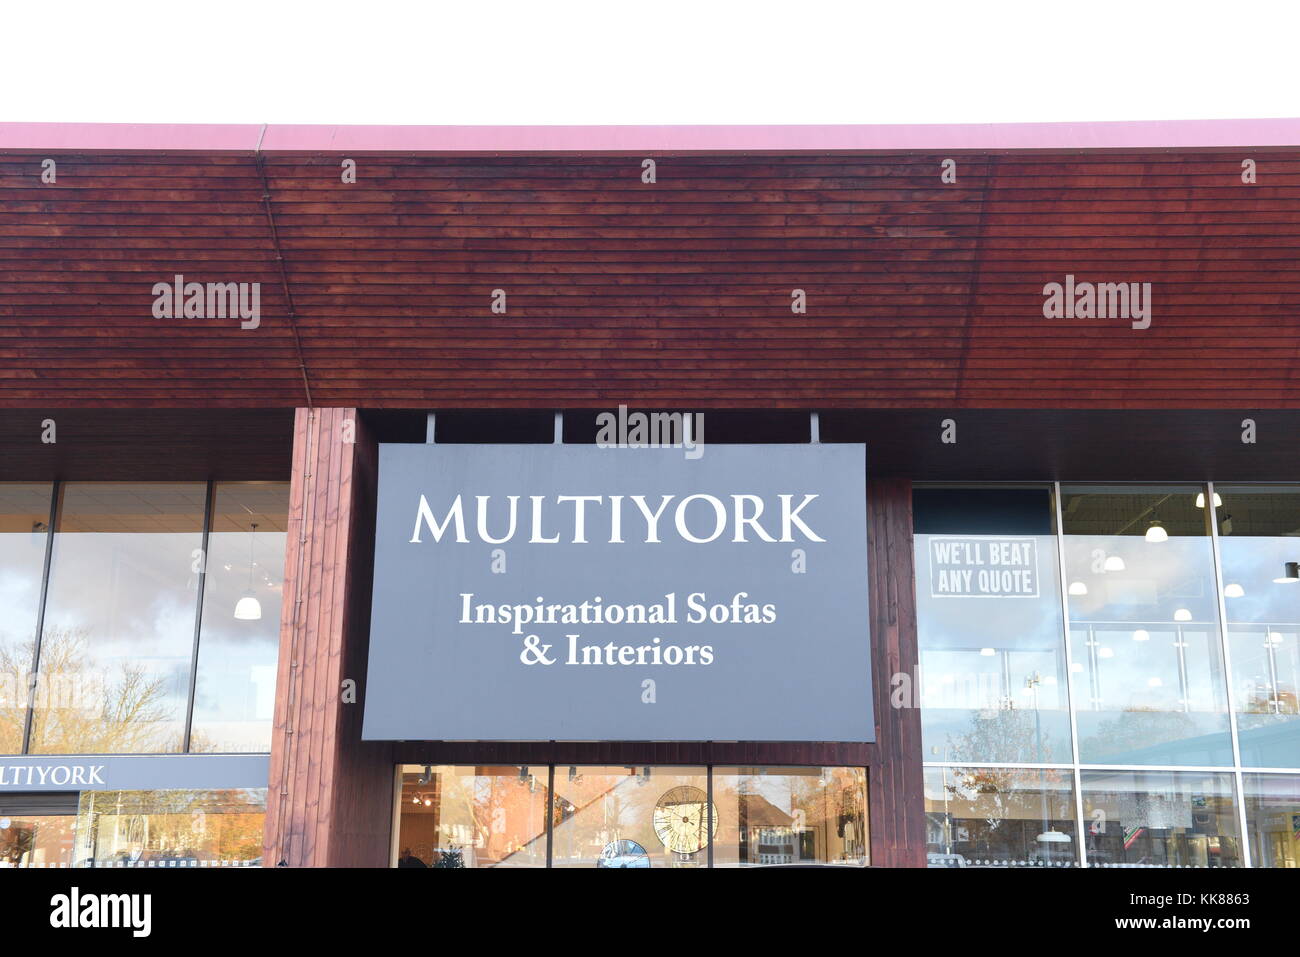 Multiyork shop front oxford 2017 Stock Photo